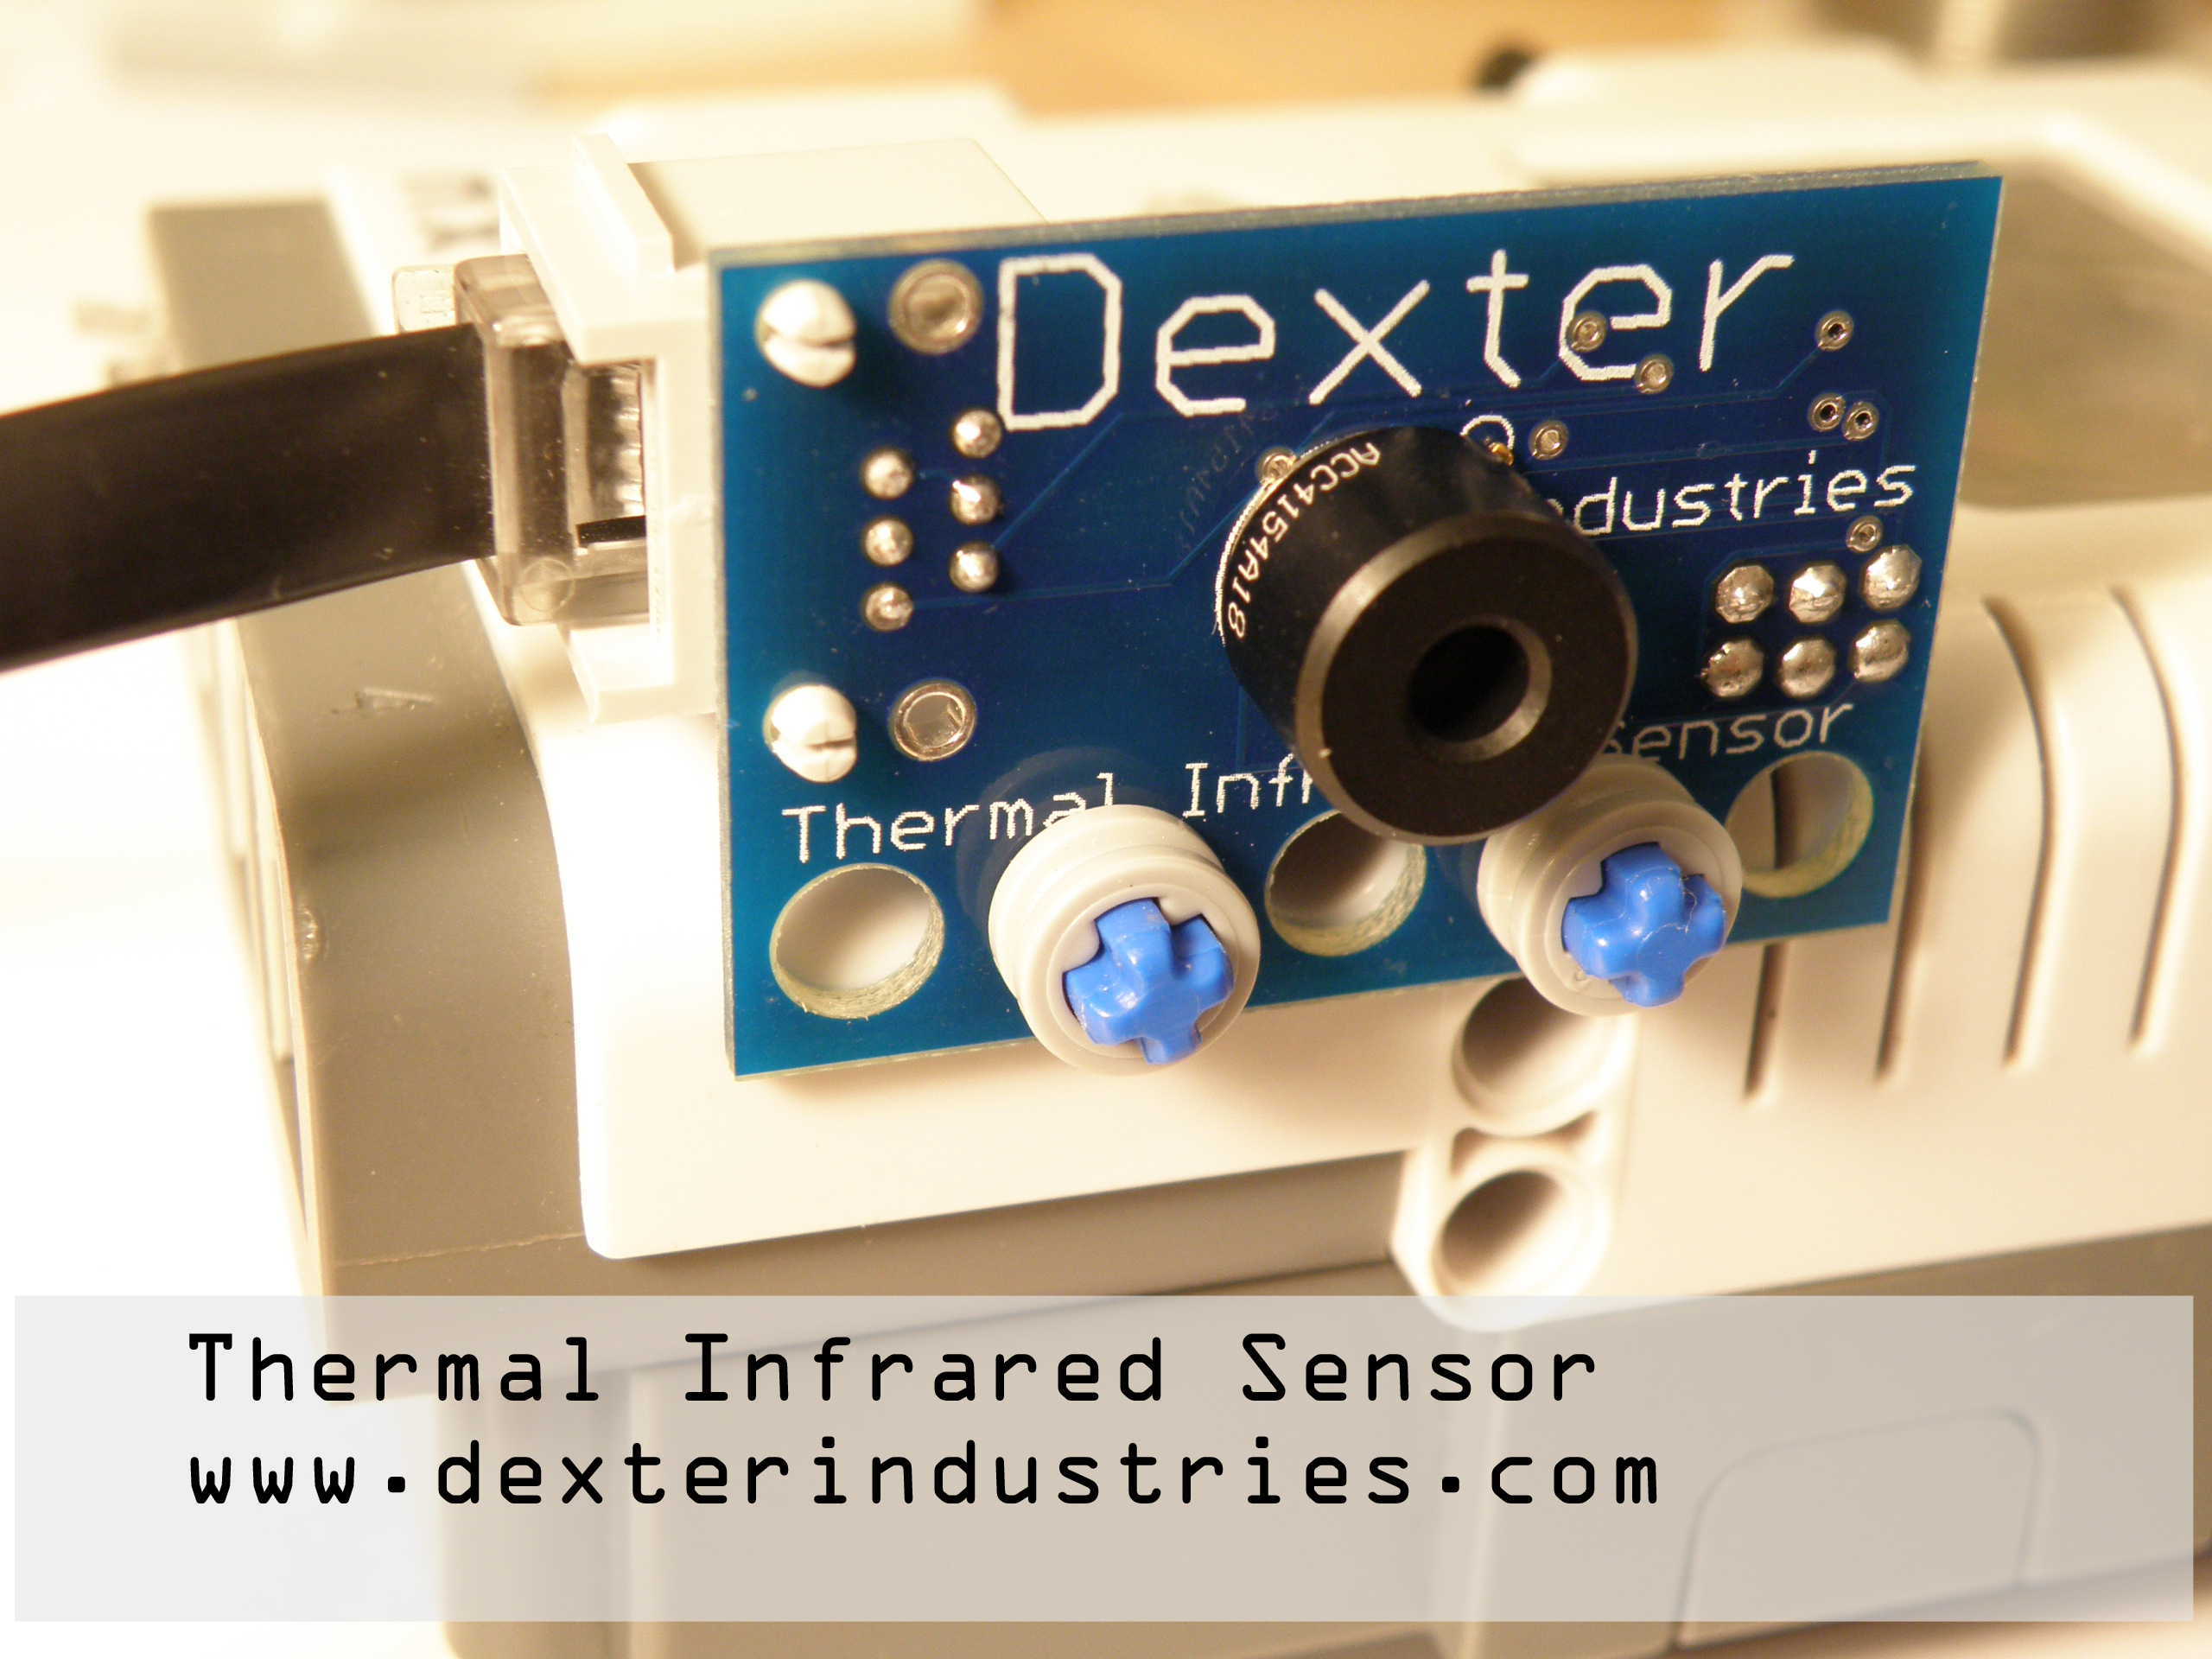 https://www.dexterindustries.com/wp-content/uploads/2011/05/Thermal-Infrared-Sensor-First-Look-3.jpg